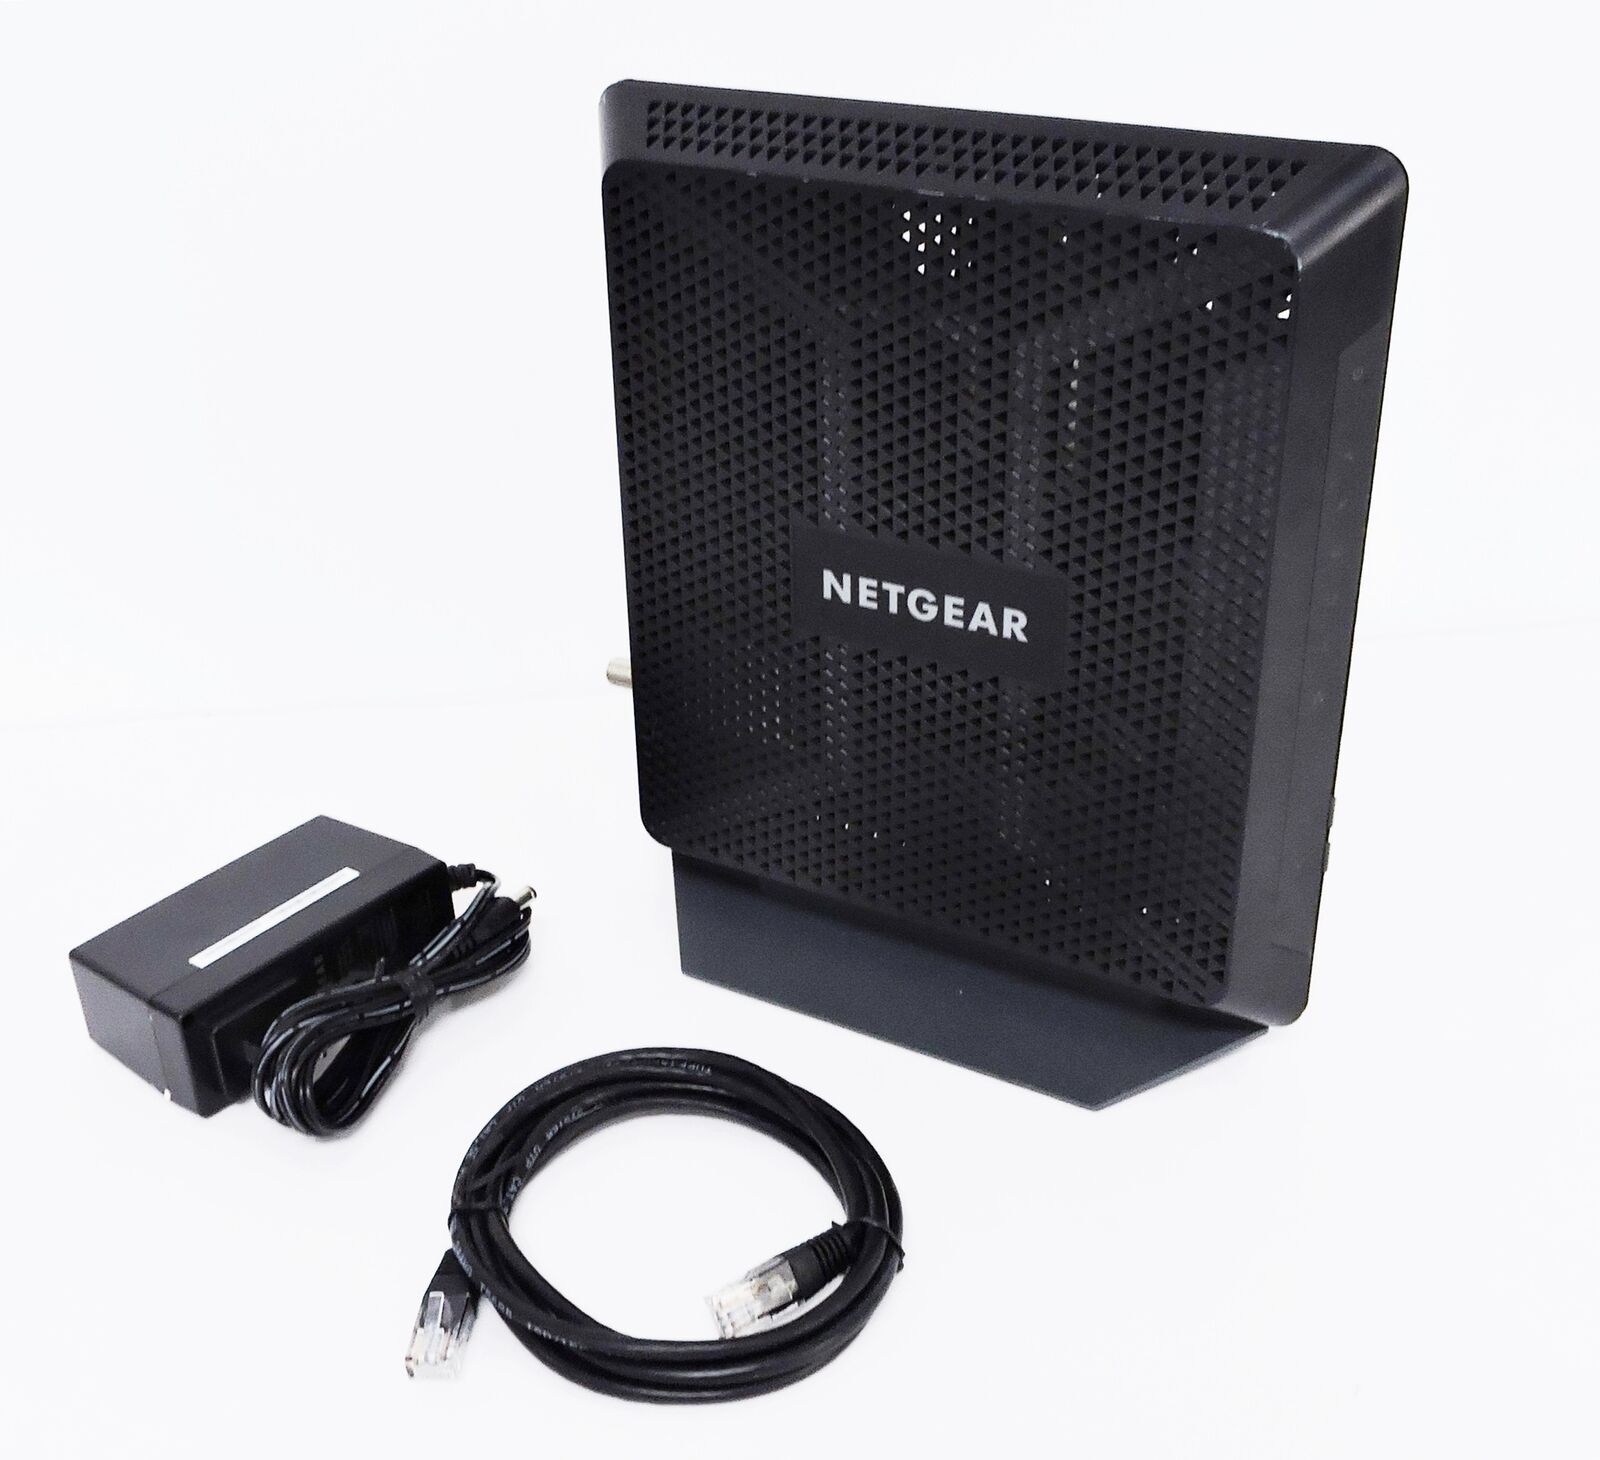 NETGEAR Nighthawk C7000v2 AC1900 Wi-Fi Cable Modem Router 